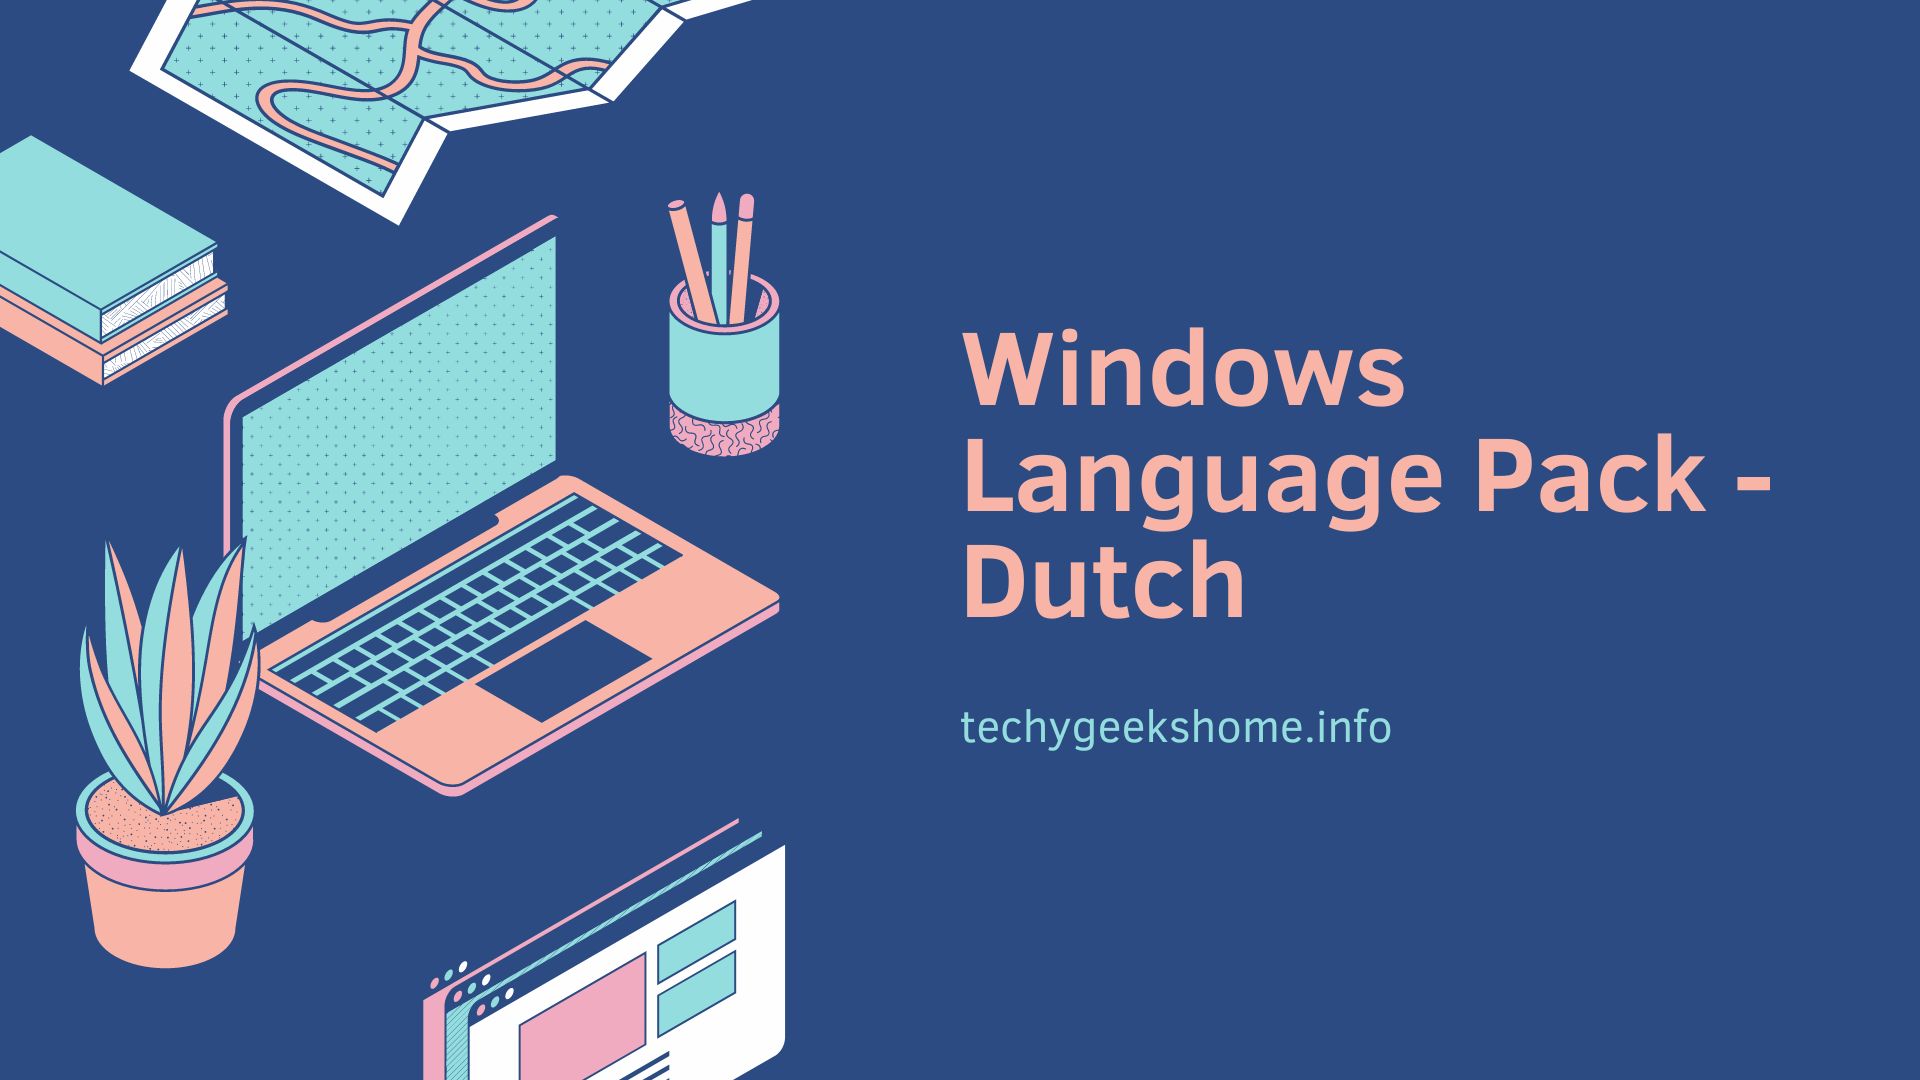 Windows Language Pack - Dutch